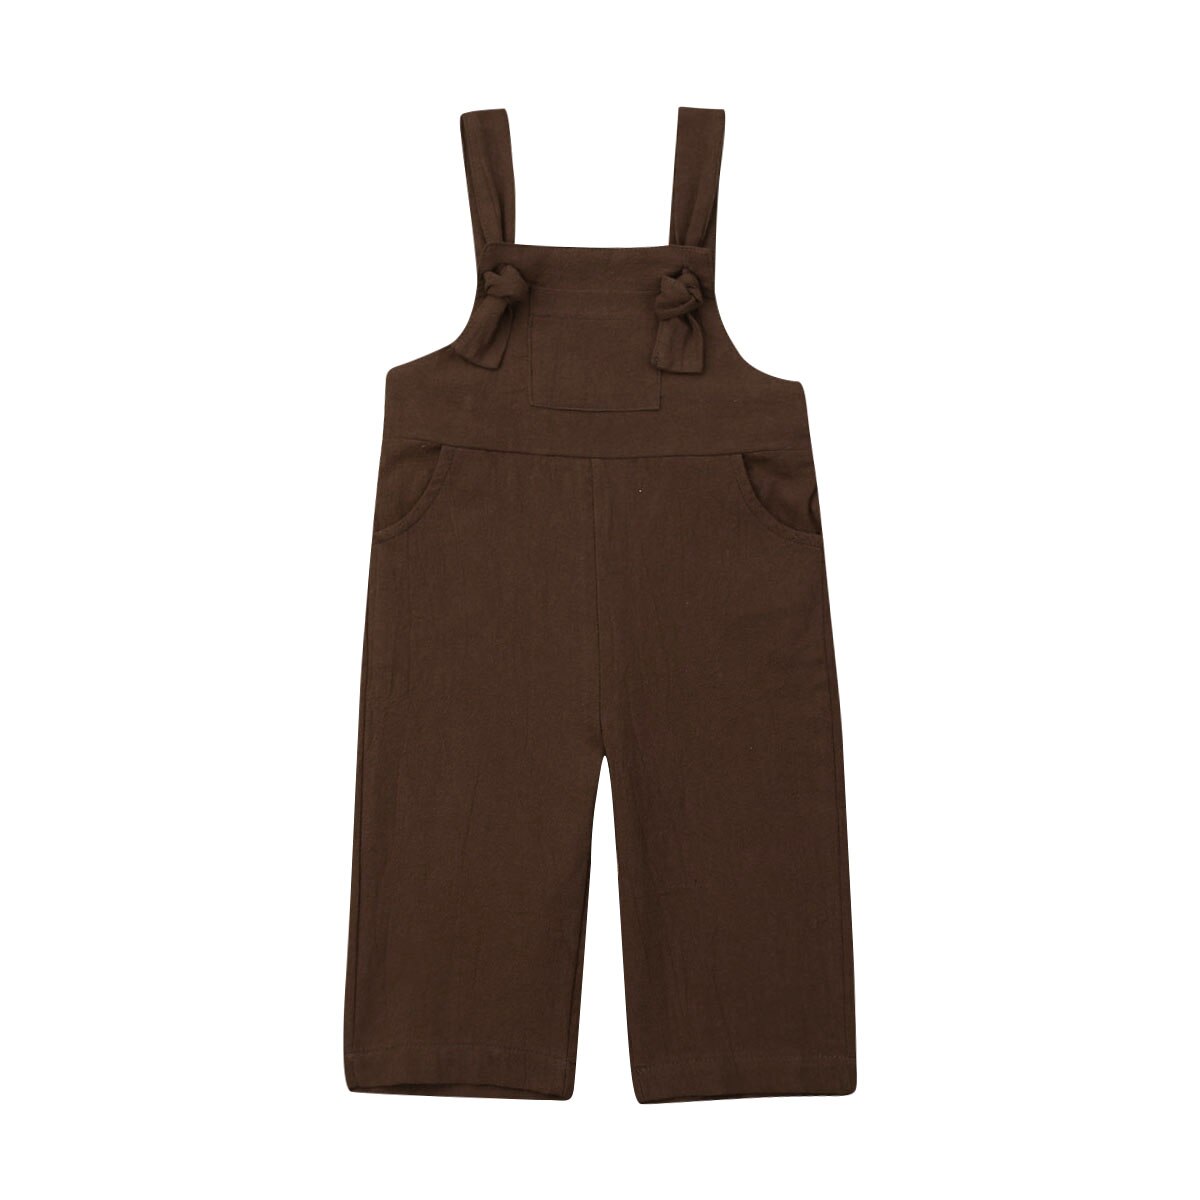 Toddler kid baby piger sommer overalls knude strappy ensfarvet linnebukser lange bukser tøj 1-6t: Brun / 12m